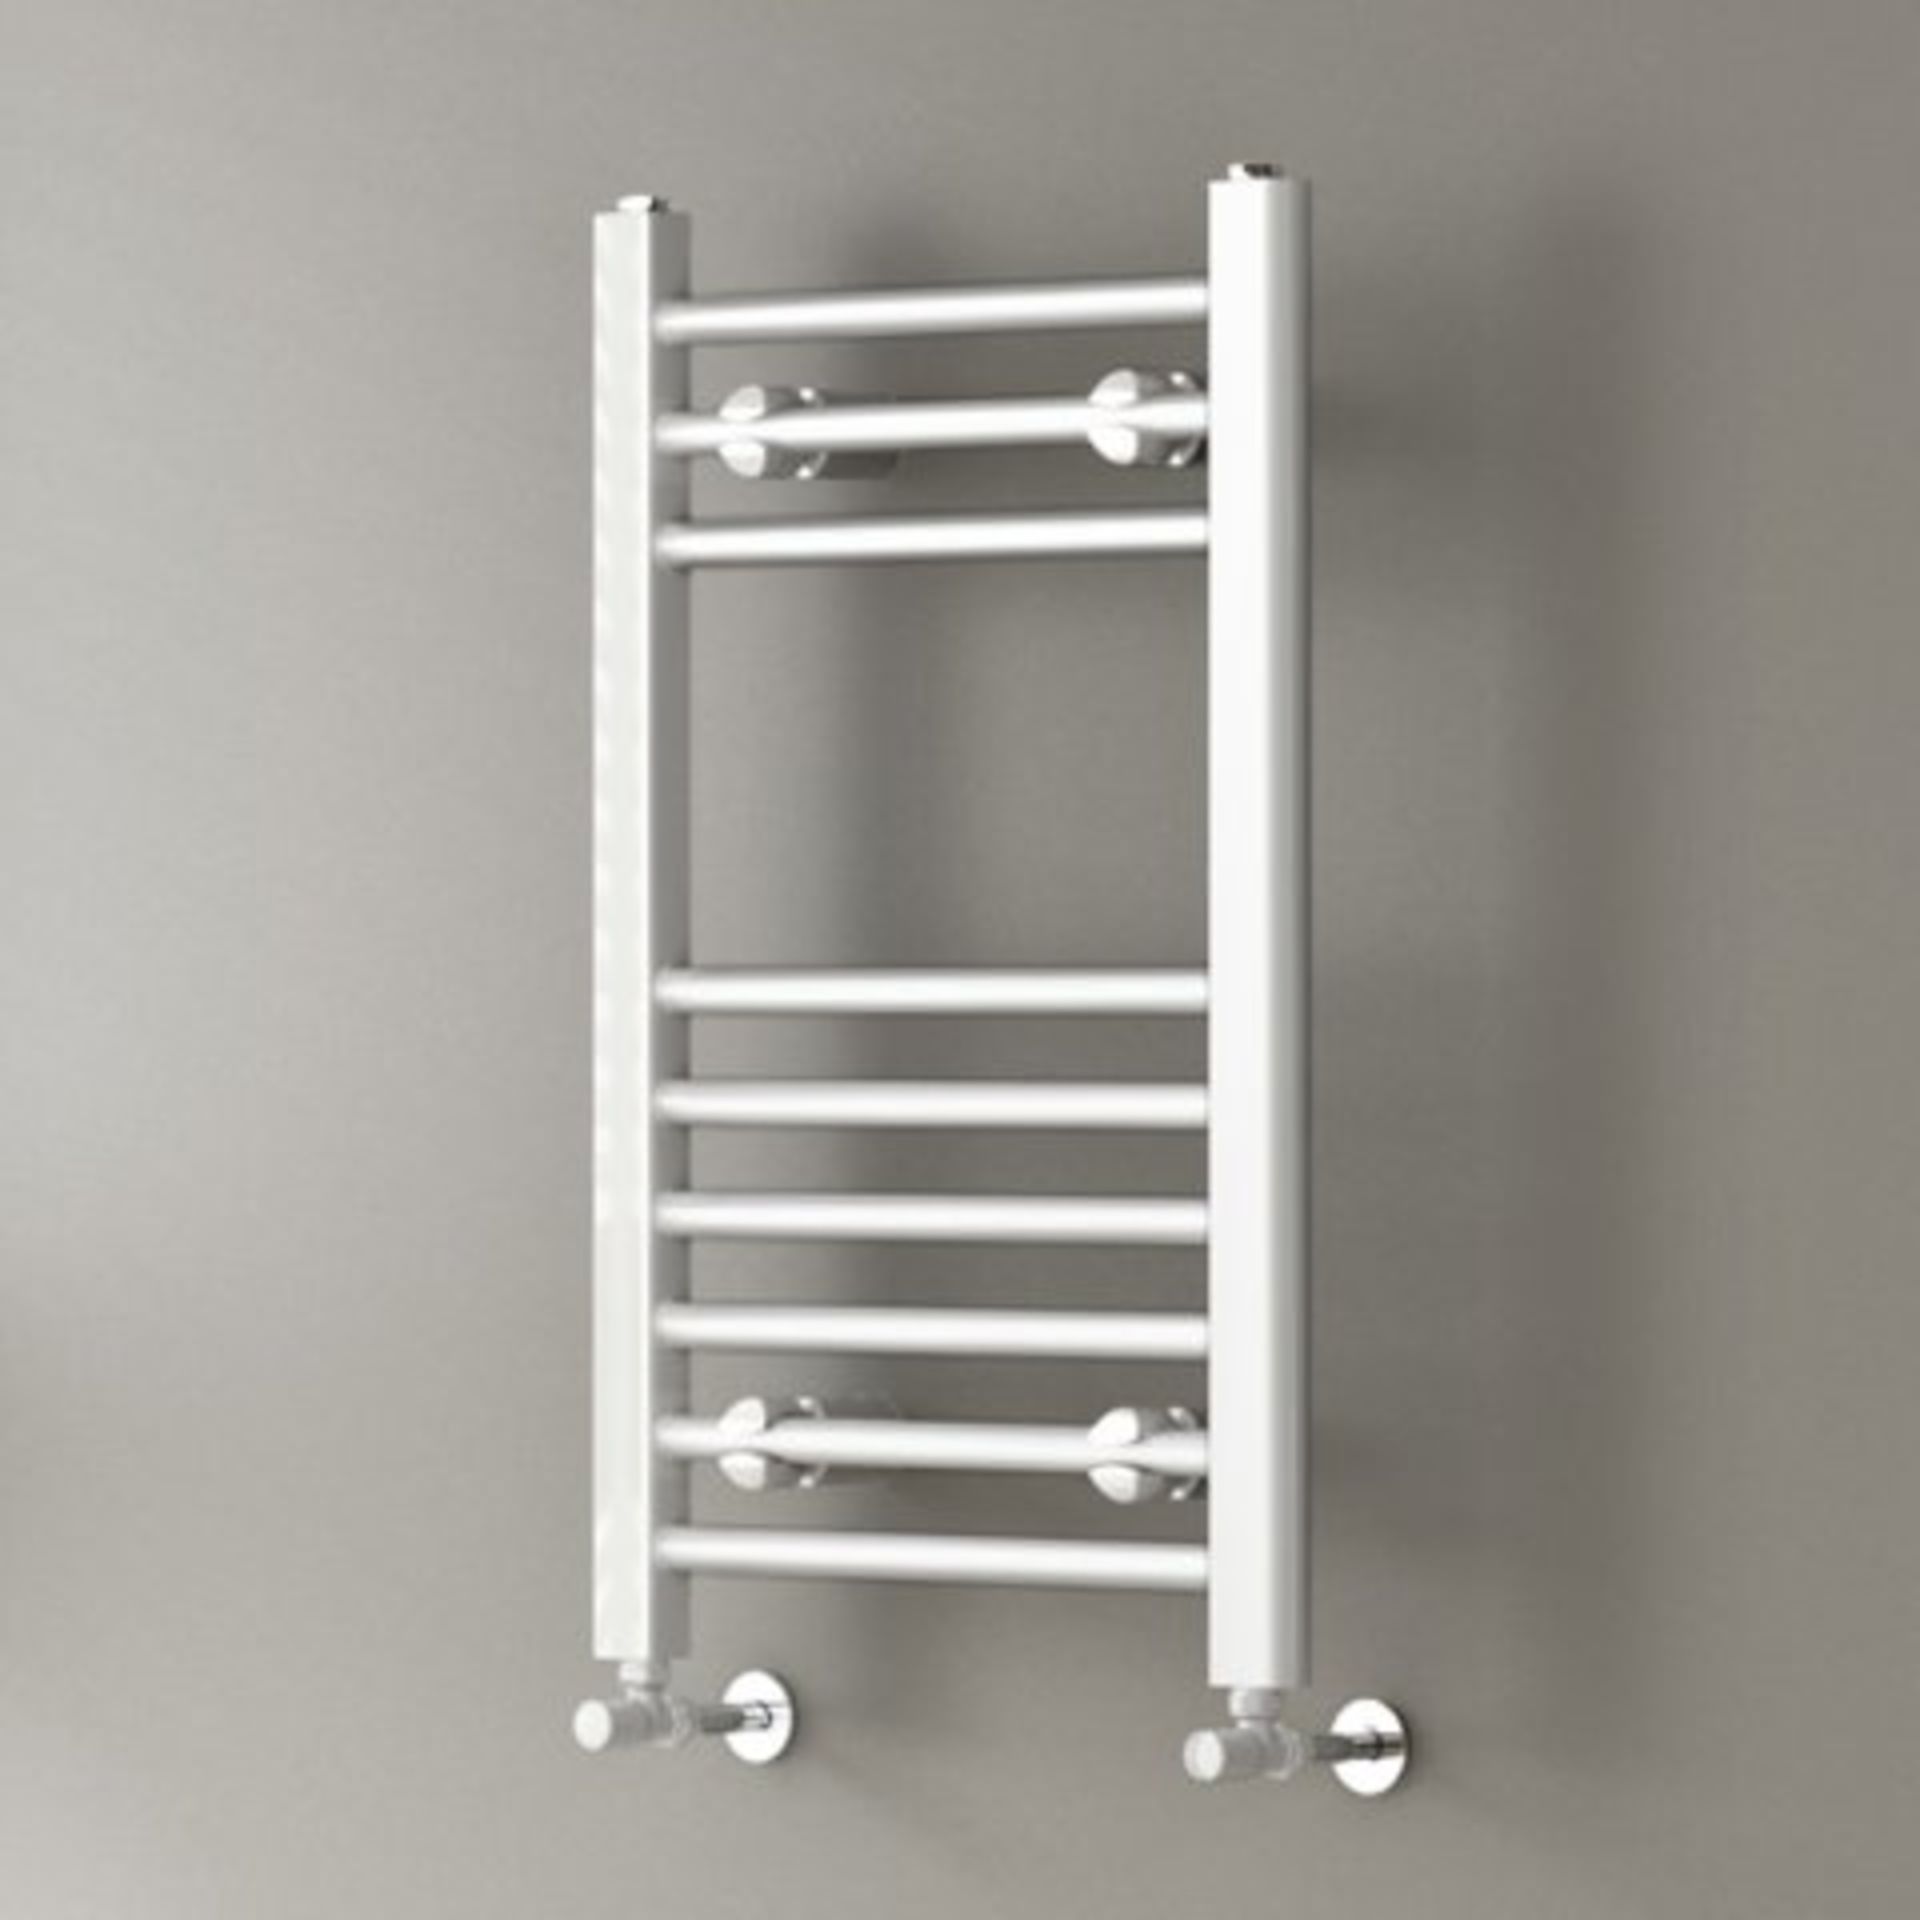 (O46) 650x400mm White Straight Rail Ladder Towel Radiator - Polar Basic Offering durability and